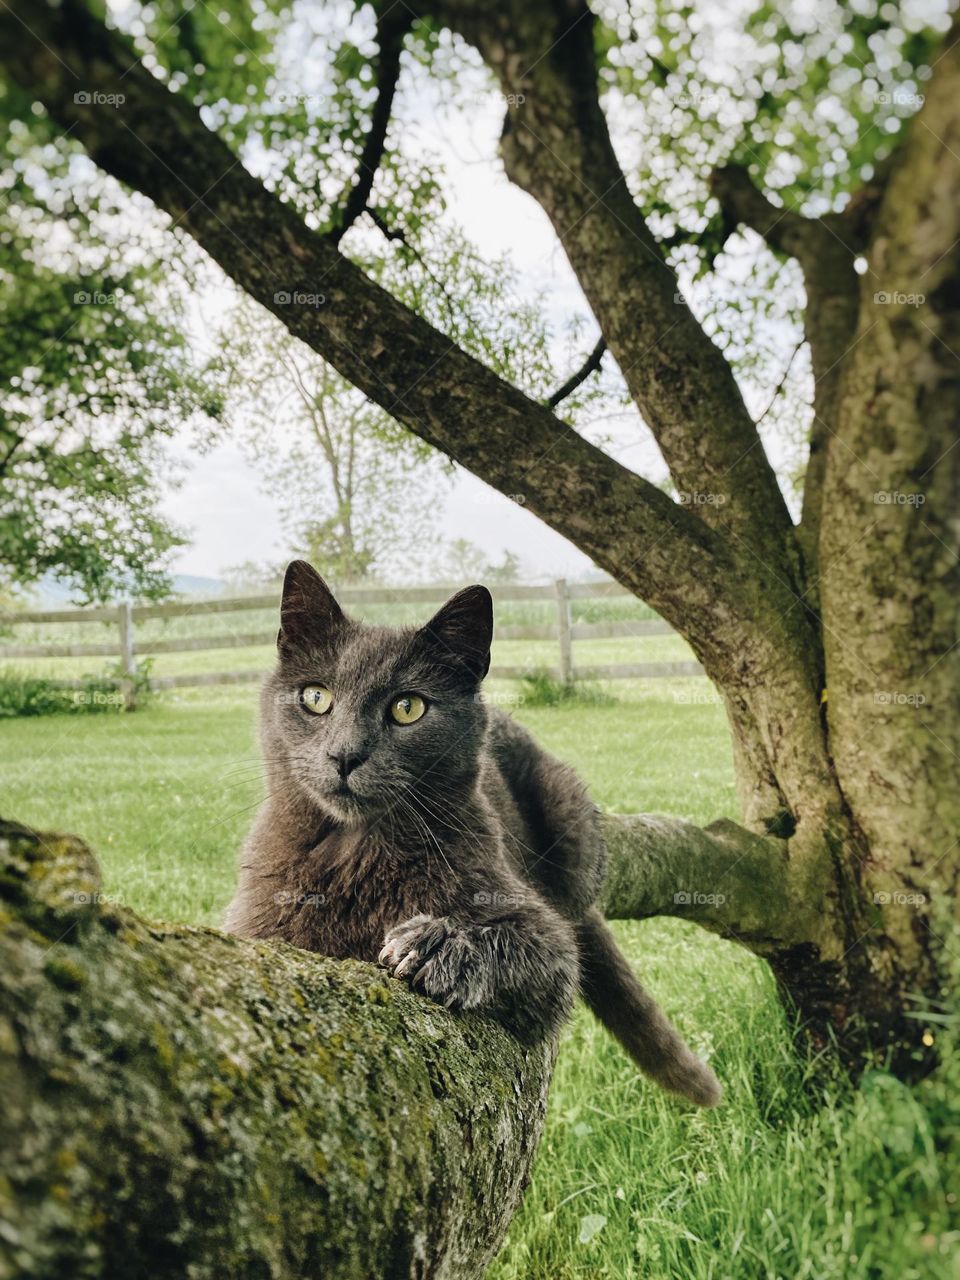 Cat on tree branch 